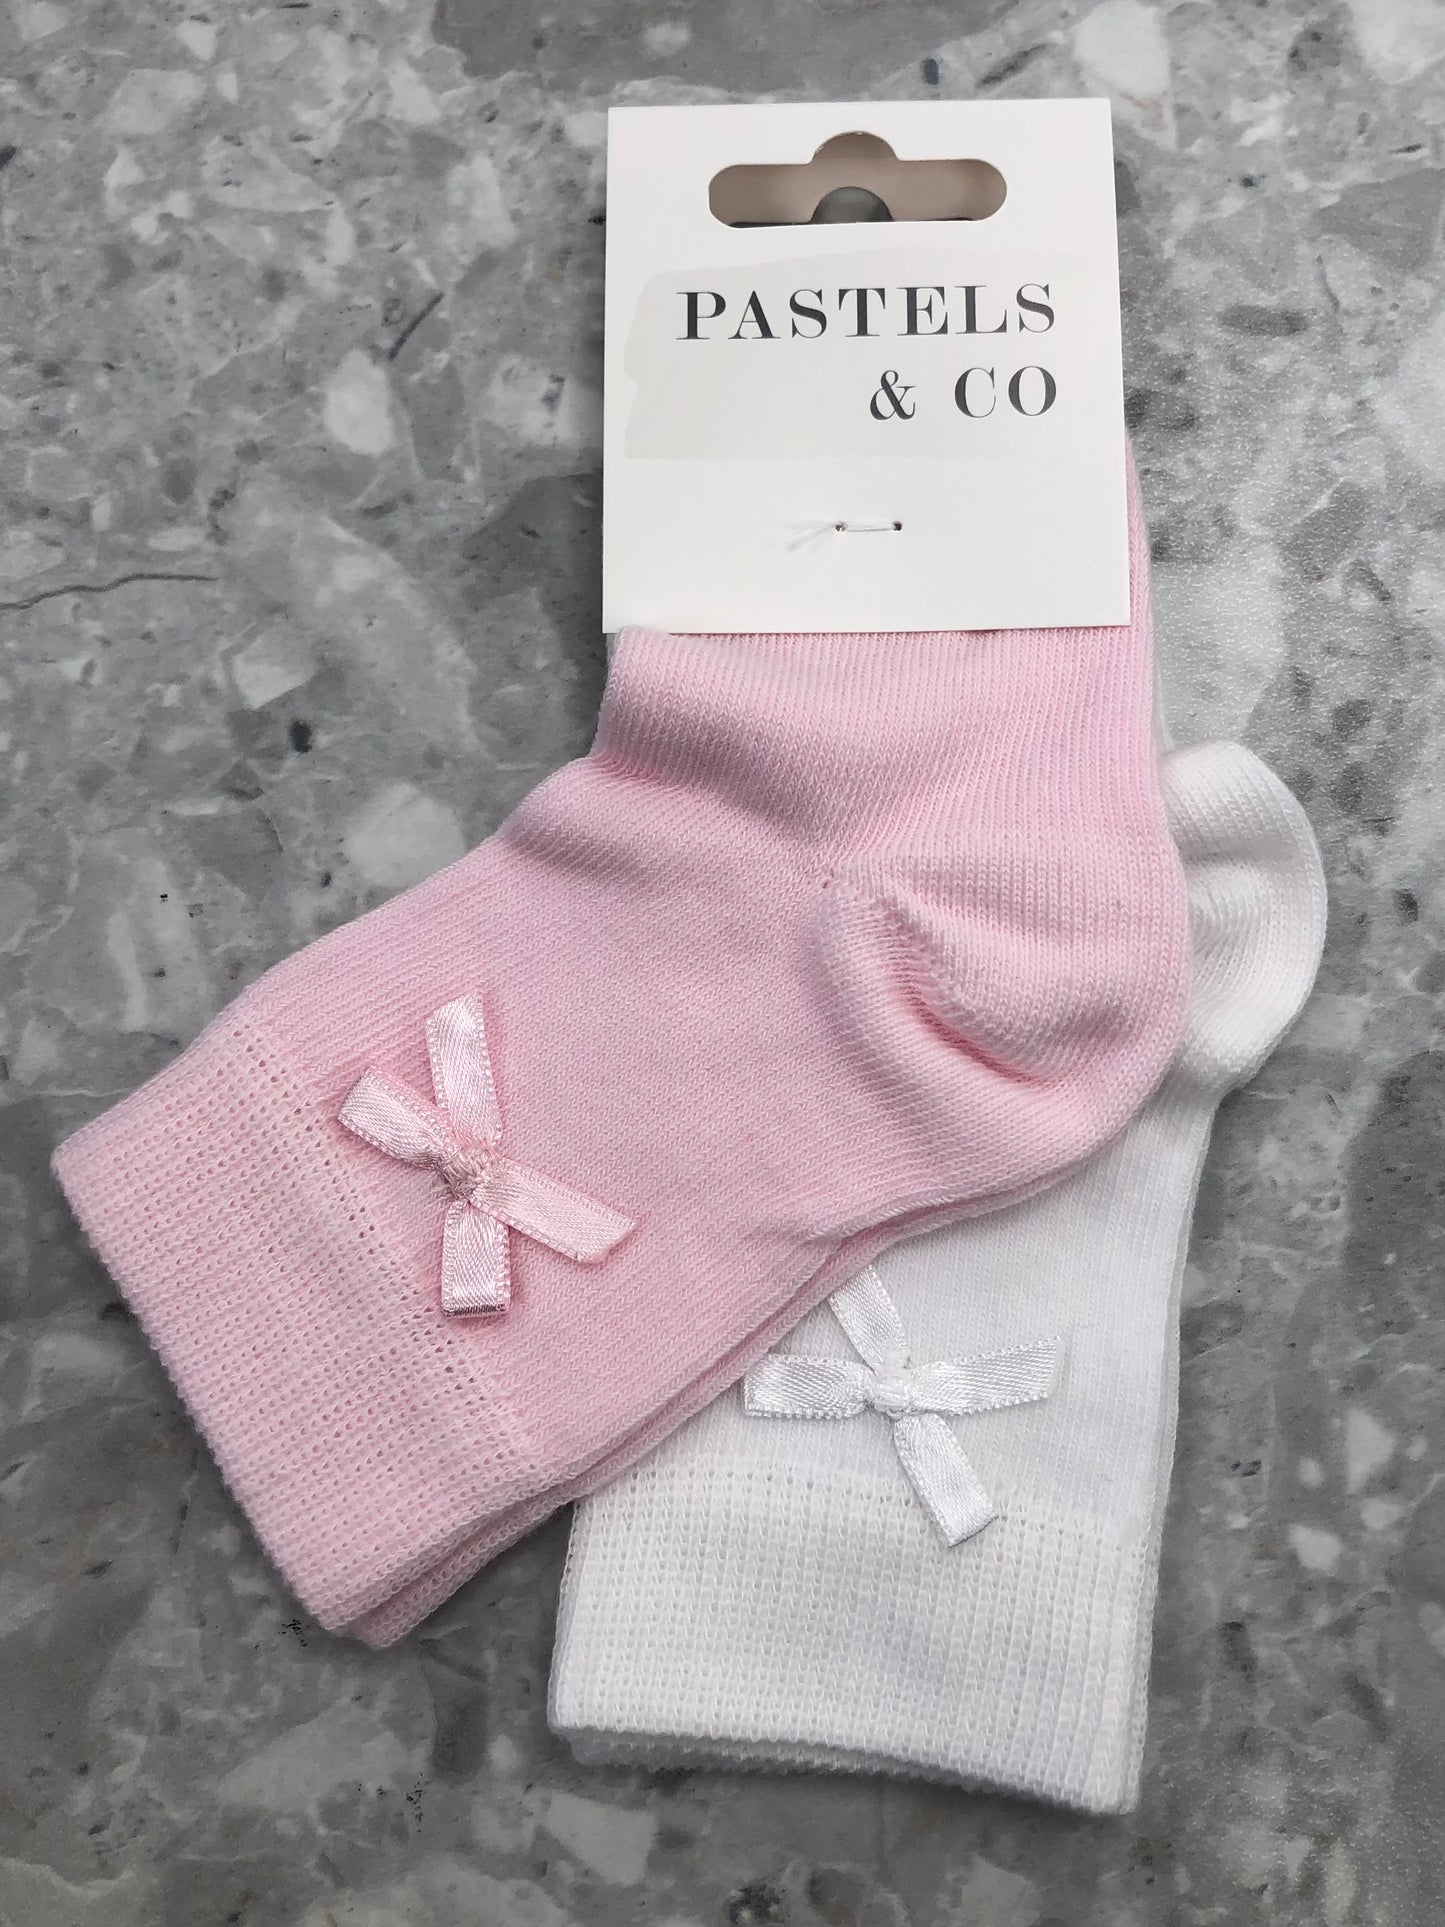 PASTELS & CO Leone Pink & White Socks